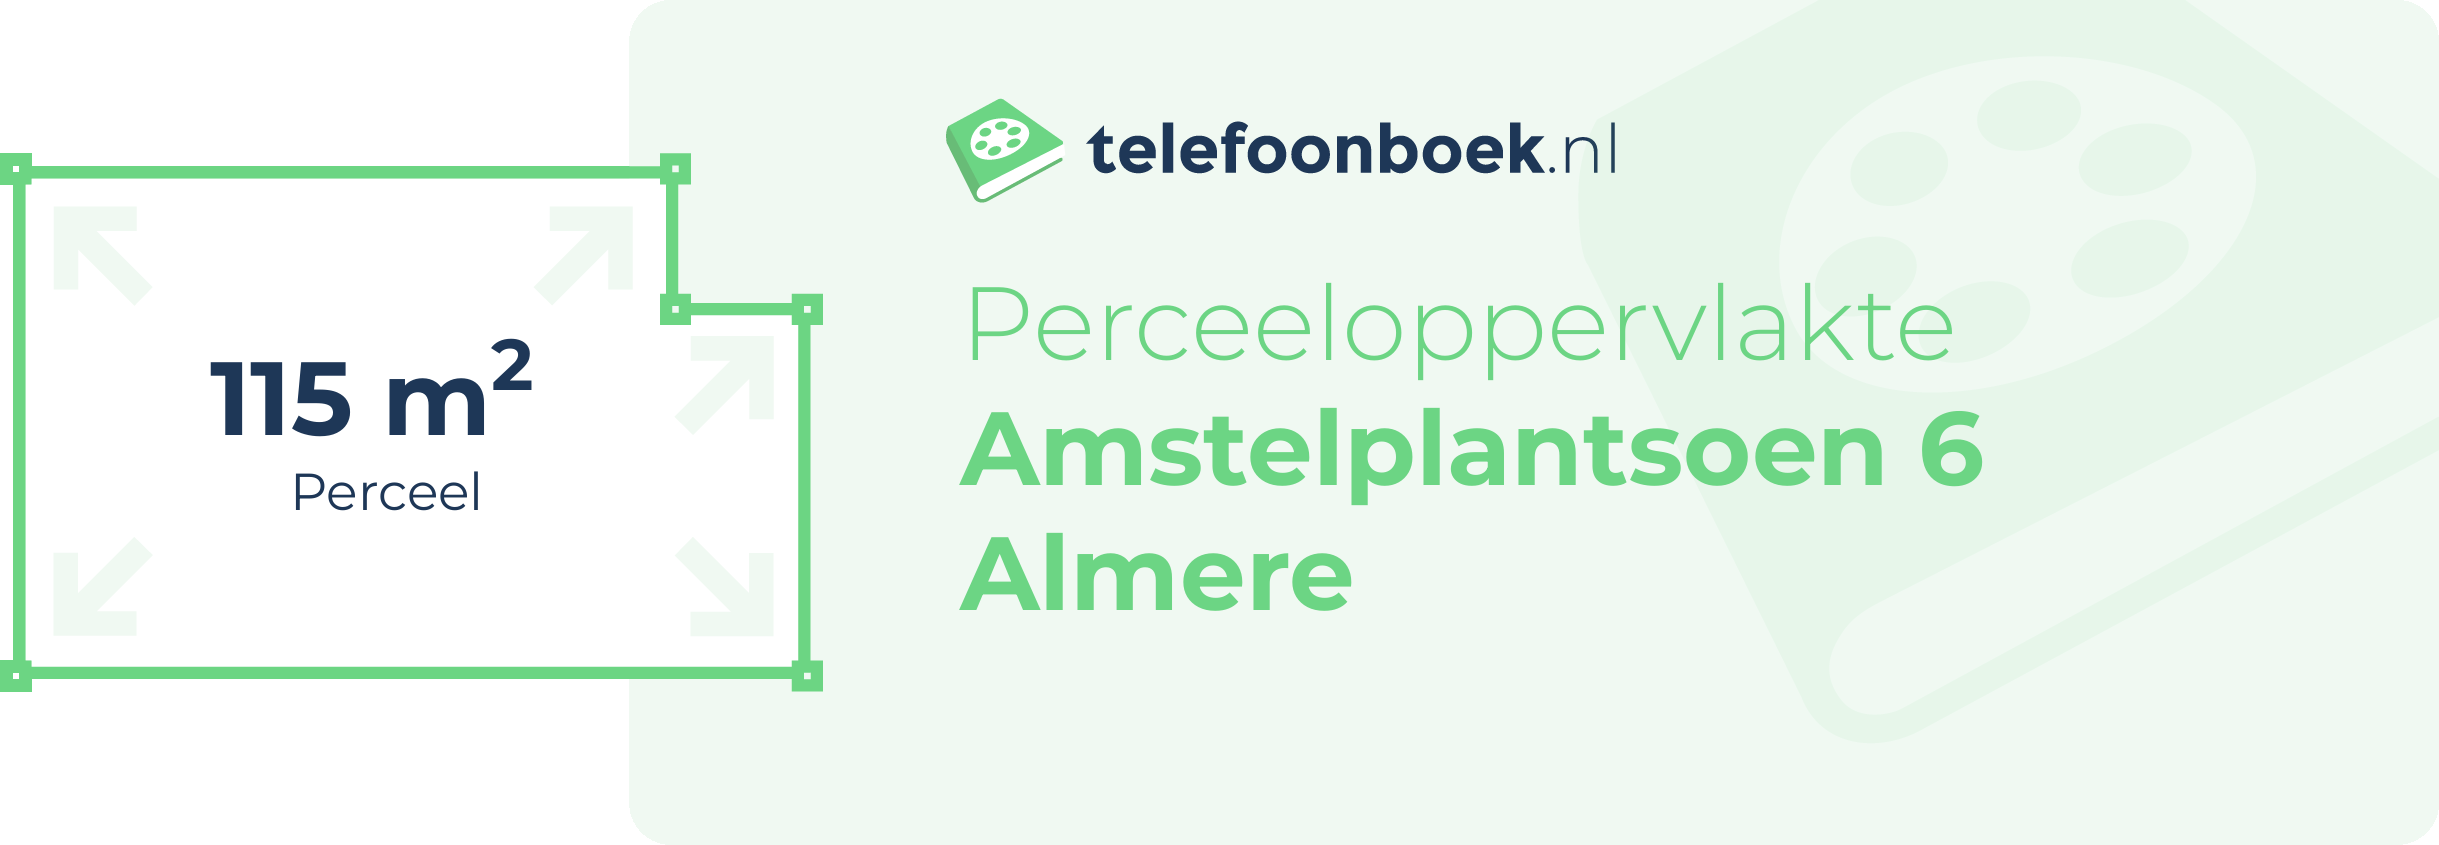 Perceeloppervlakte Amstelplantsoen 6 Almere